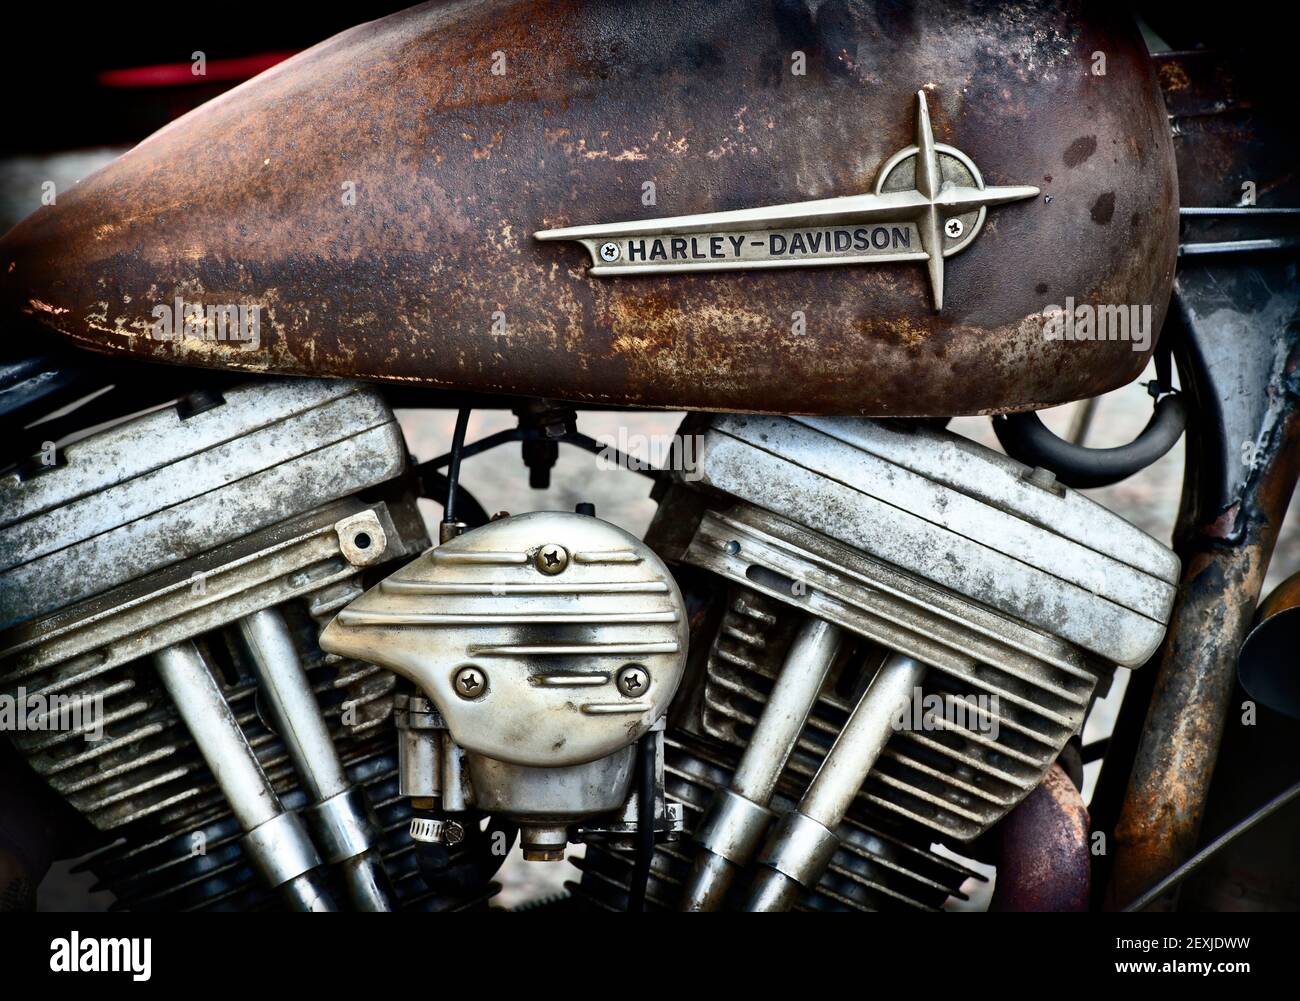 Old Rusty Harley Davidson motorcycle. UK Stock Photo